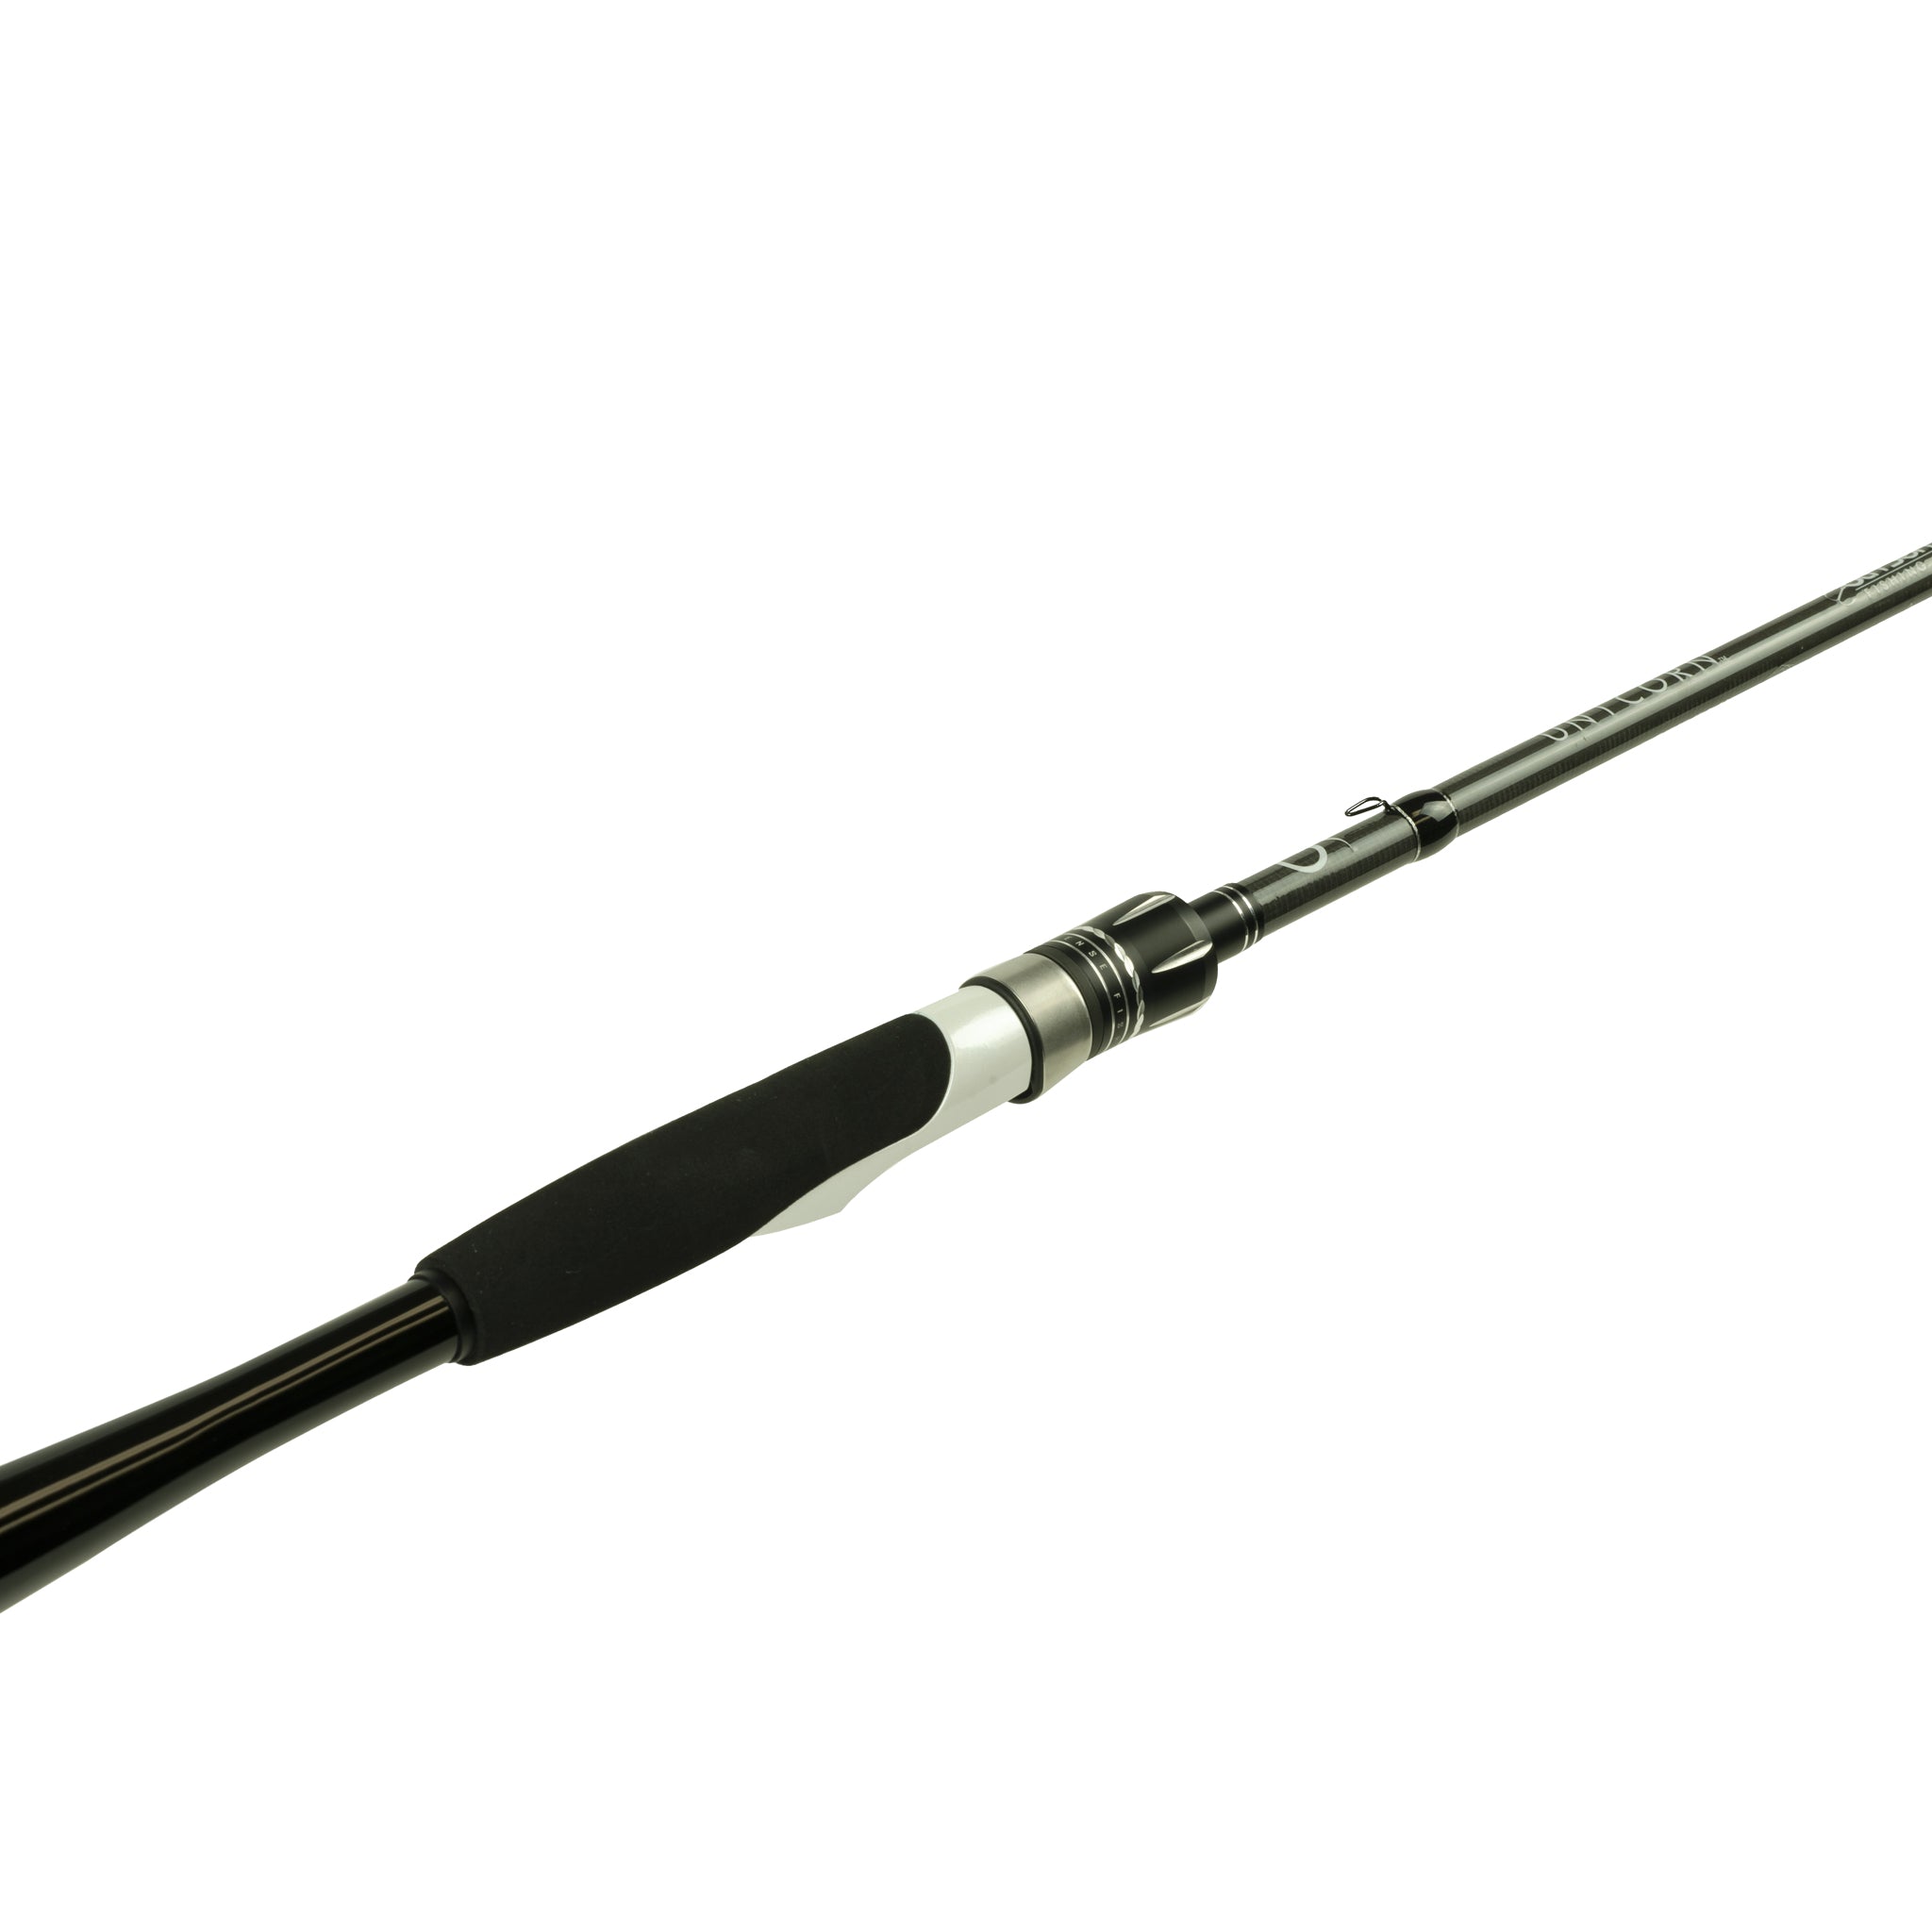 6th Sense Fishing - Casting Rods - Unicorn 7'2 Medium-Light, Fast